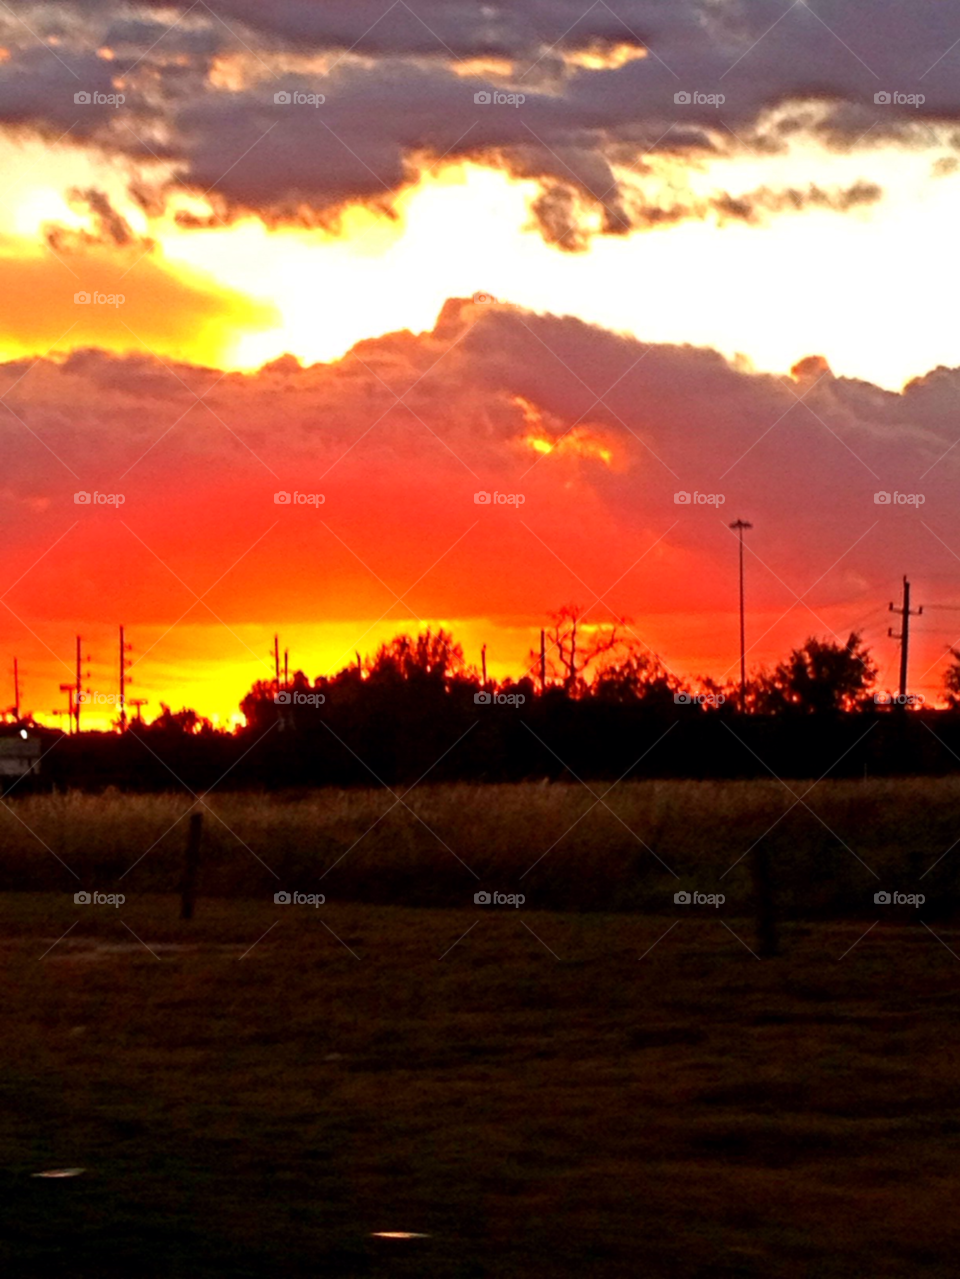 houston sky nature sunset by amelia474